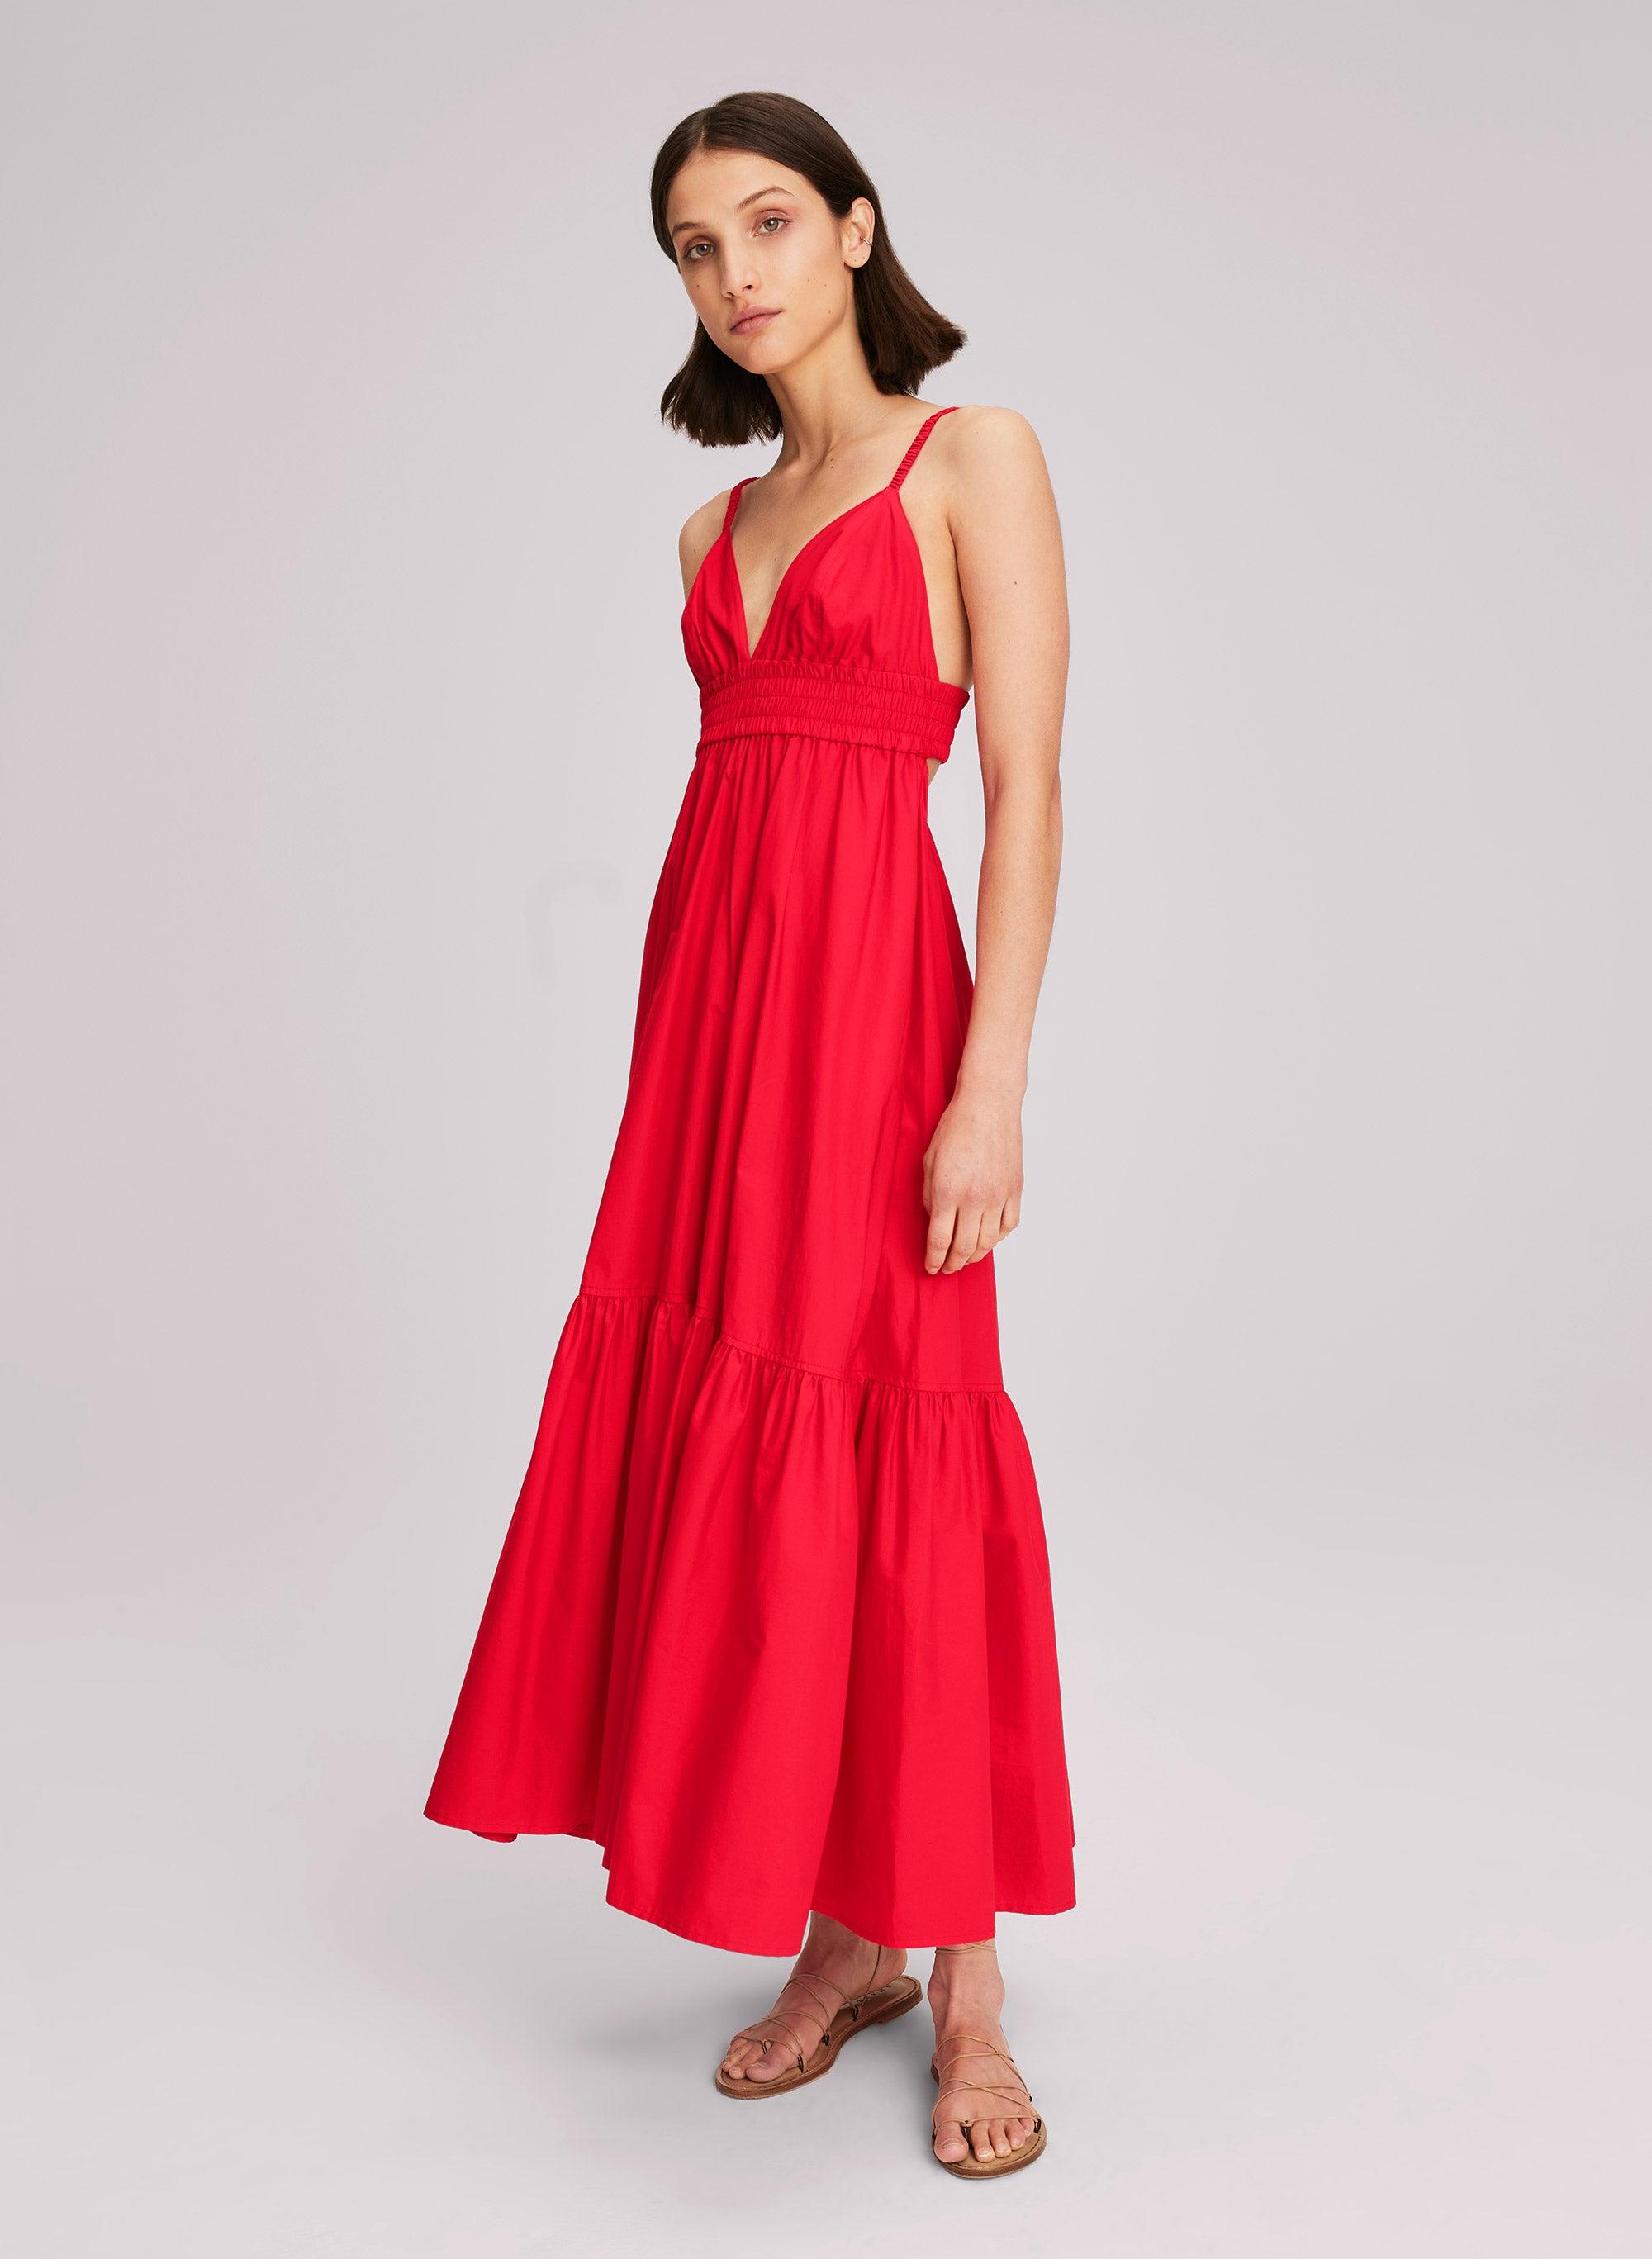 Floral Cutwork Wrap Dress (Red) – Half Full